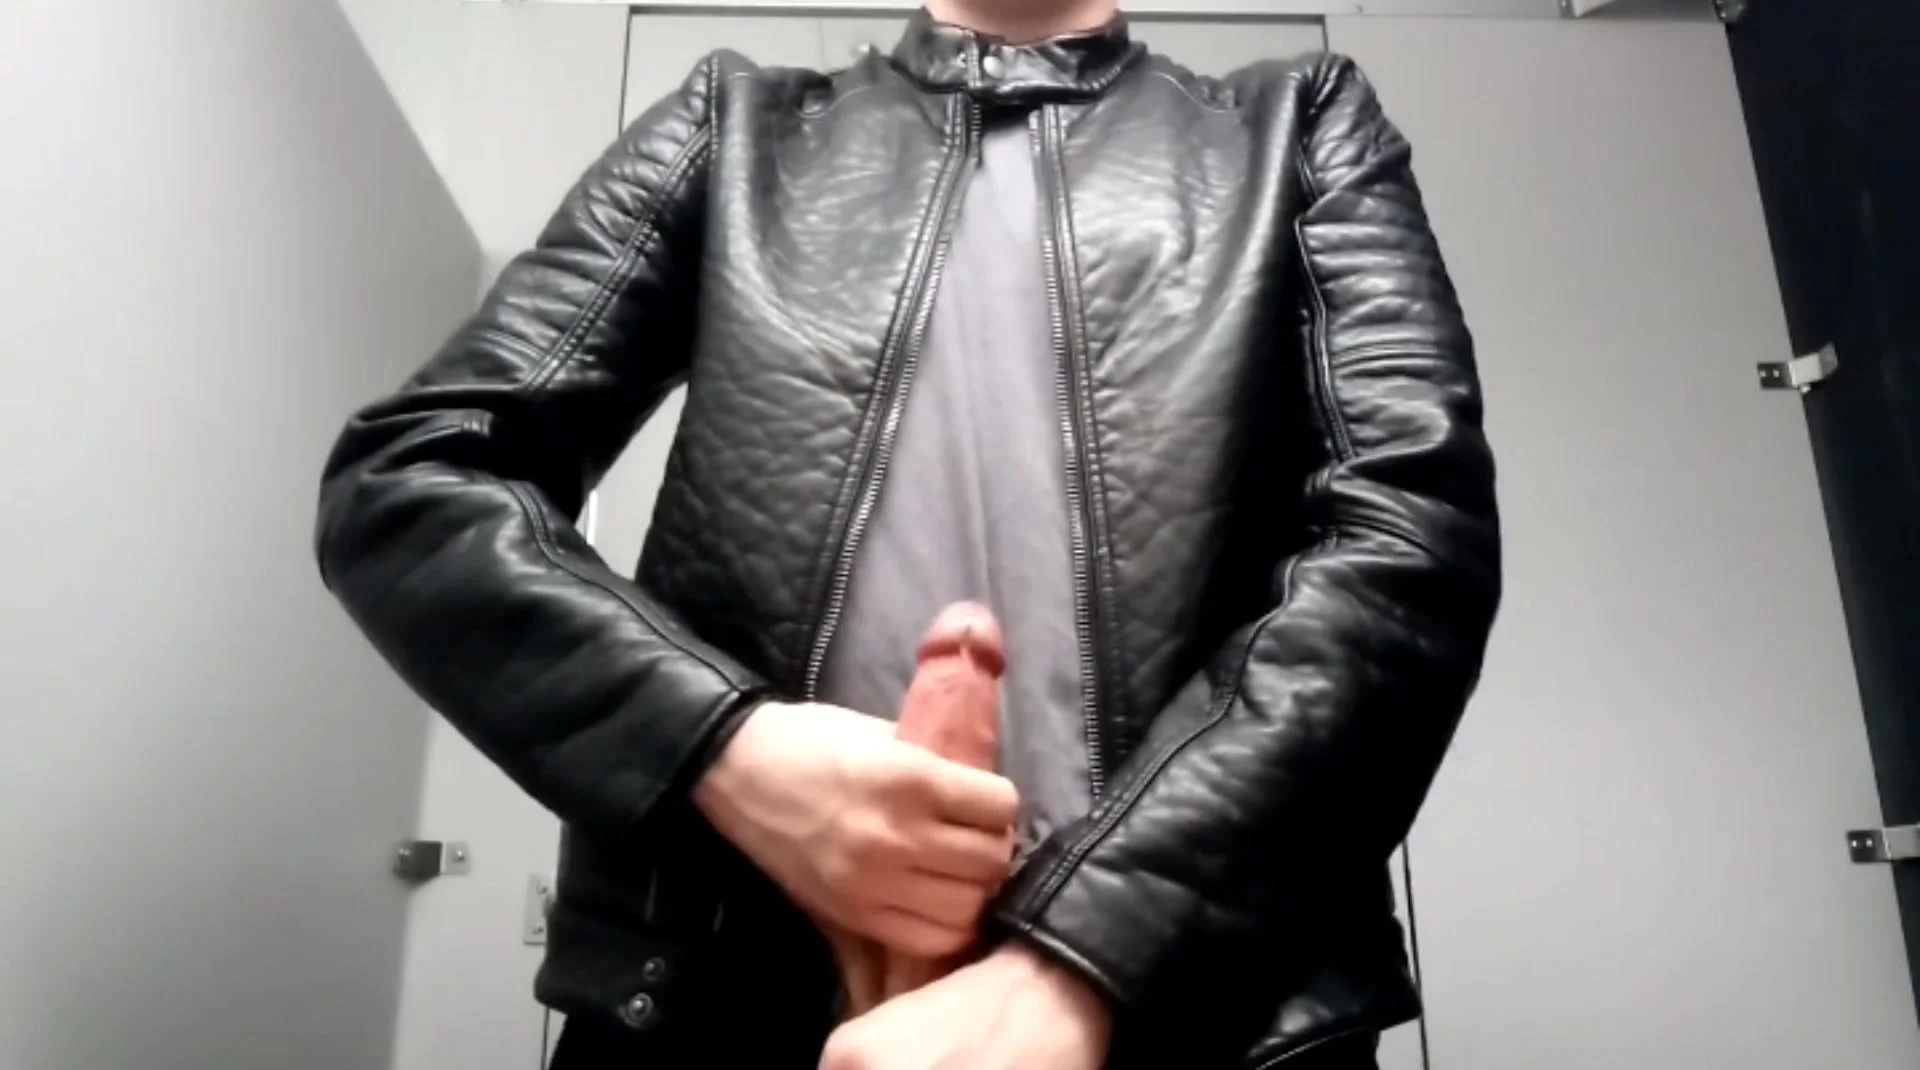 Jacket Off - Quick Jerk Off in my Leather Jacket in Dorm Restroom - ThisVid.com